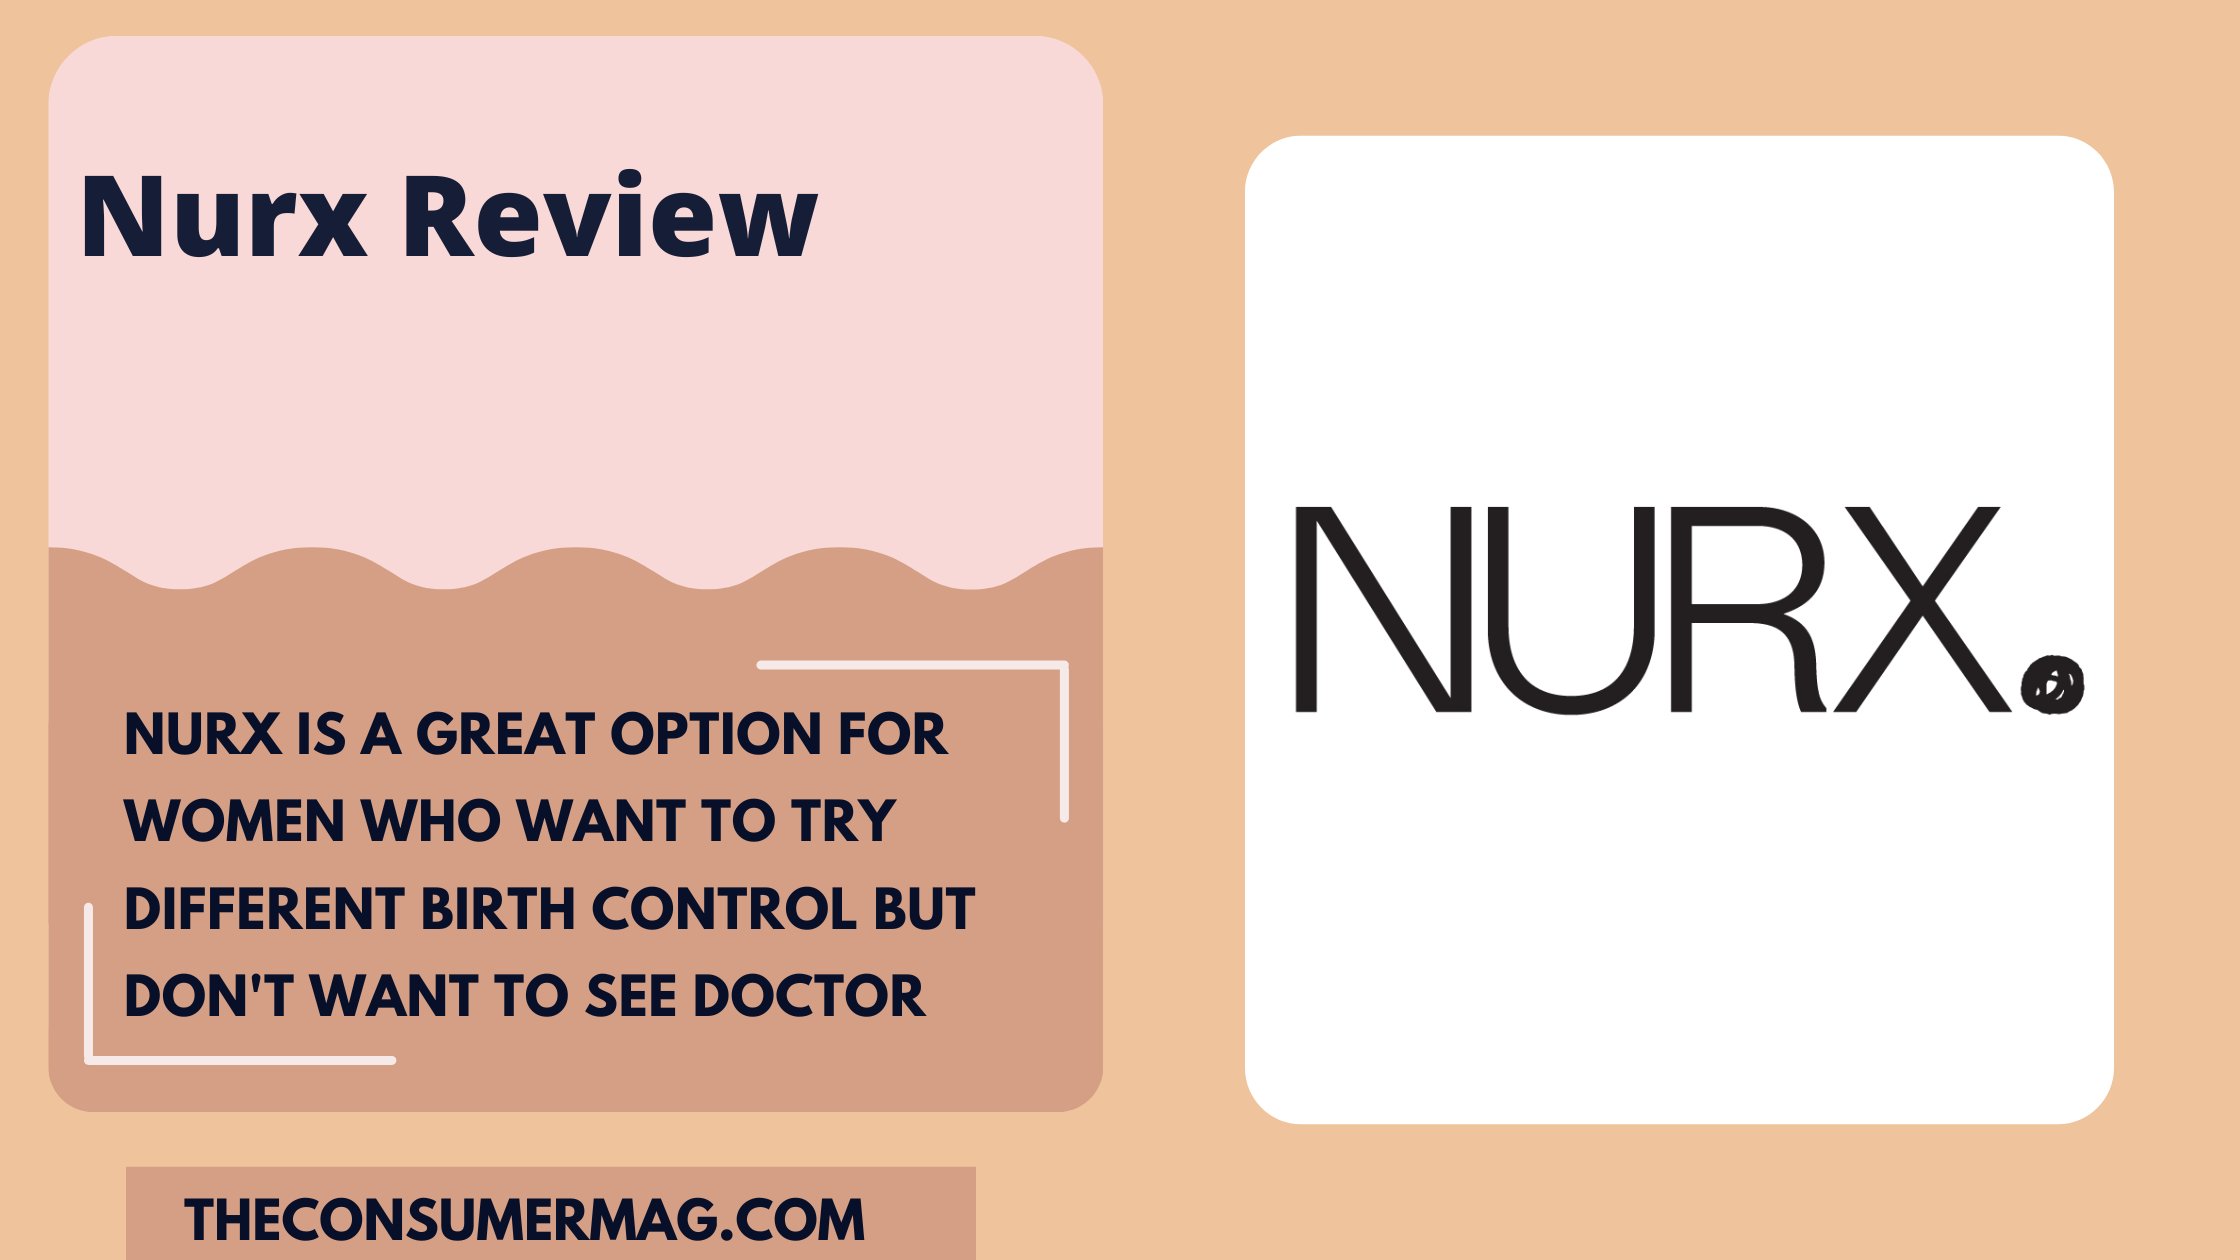 Nurx Birth Control featured image